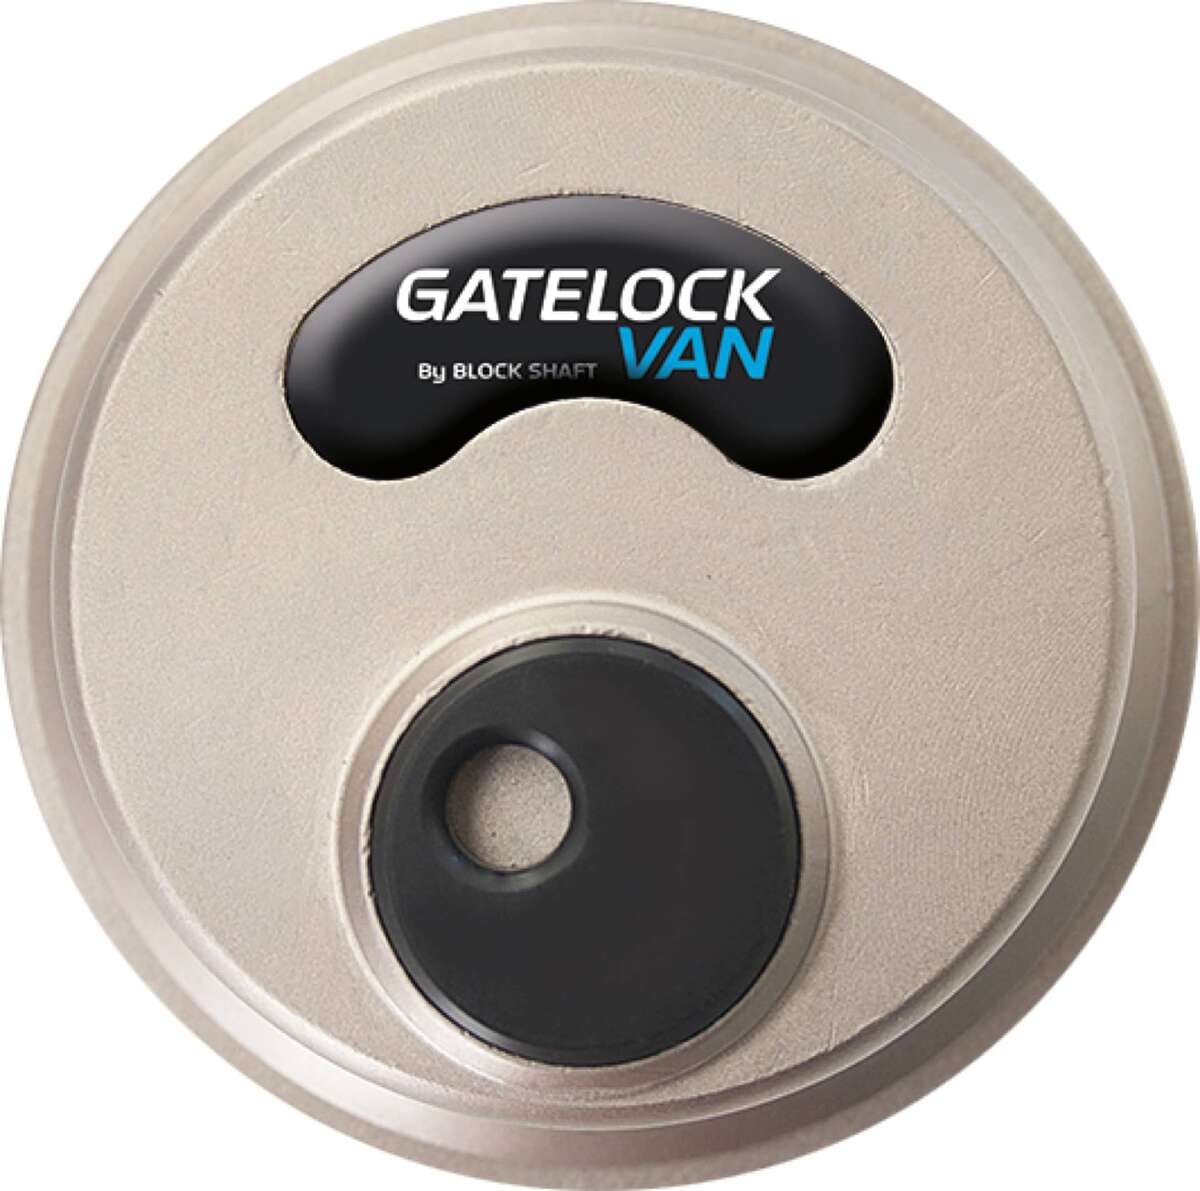 Gatelock-van-small-f-serie-beveiligingsslot-bestelwagen-universeel.jpg